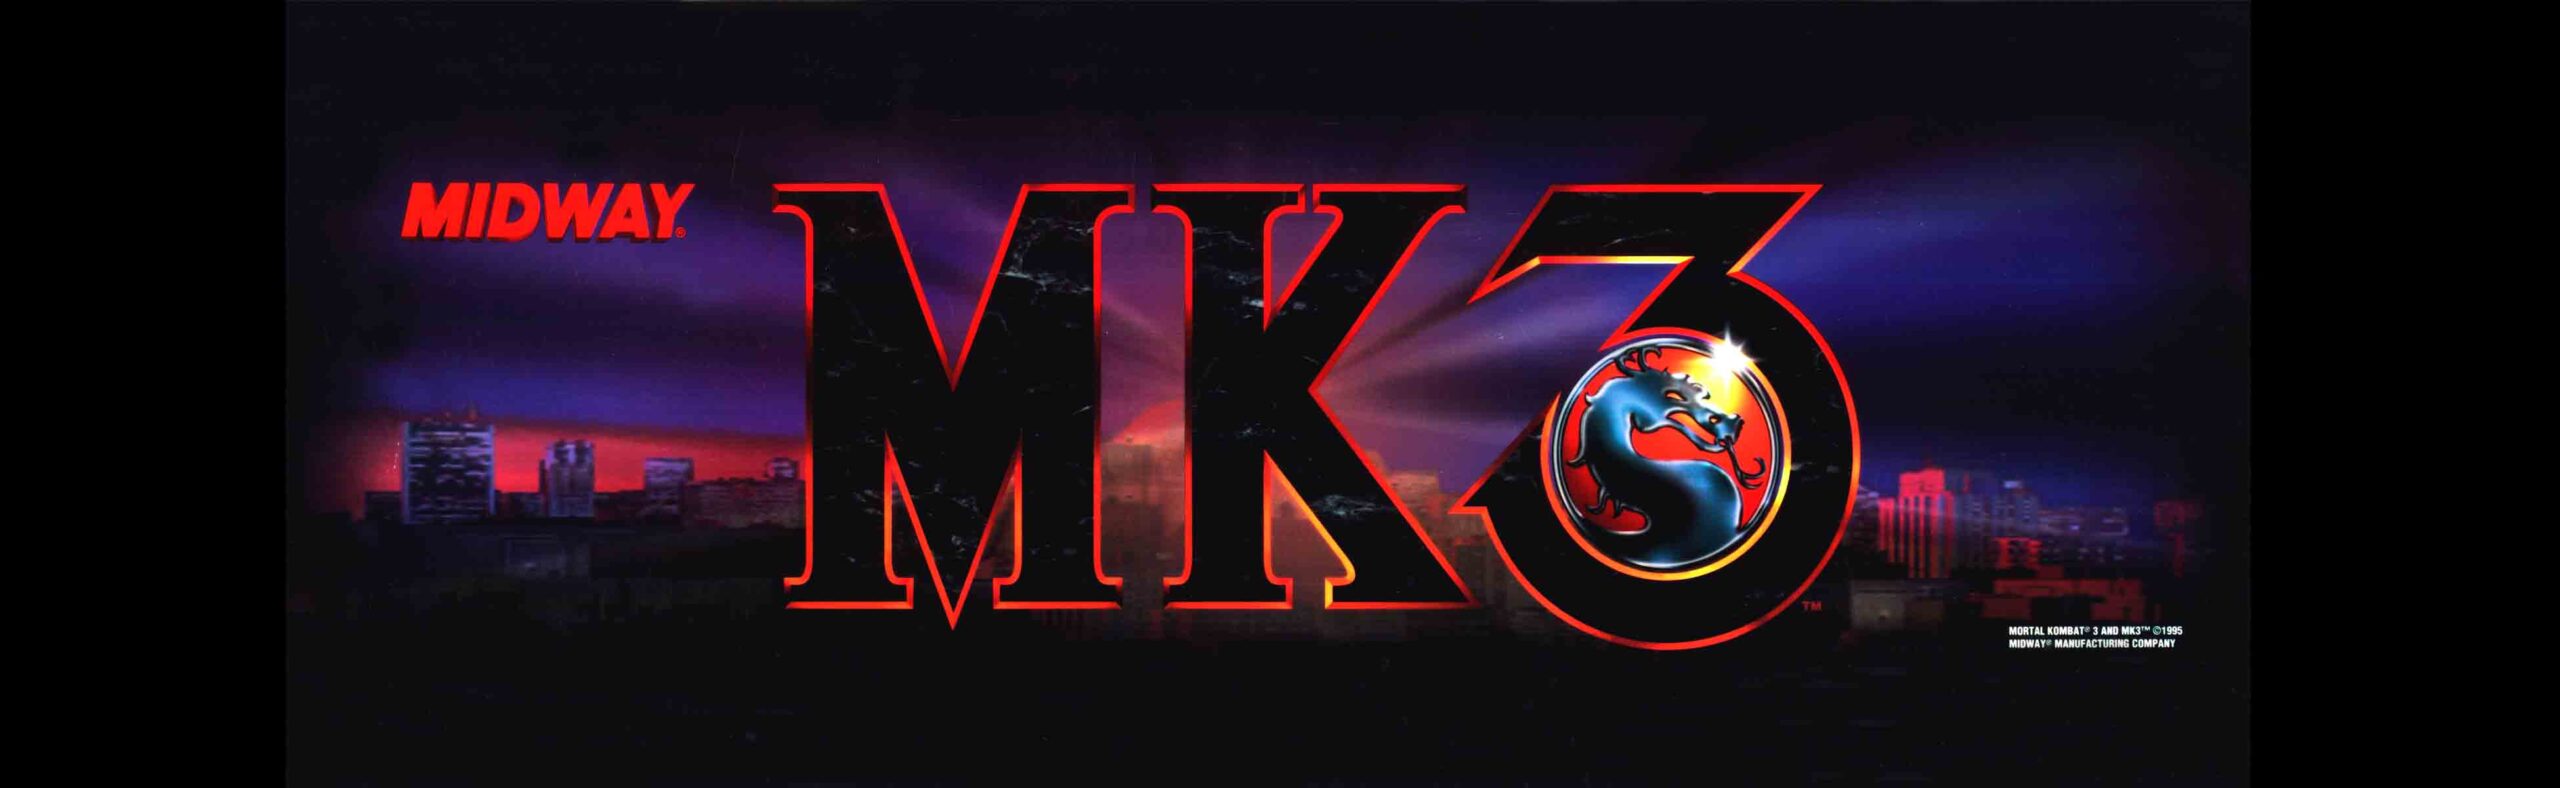 Mortal Kombat Arcade Marquee 25" x 7.5" 